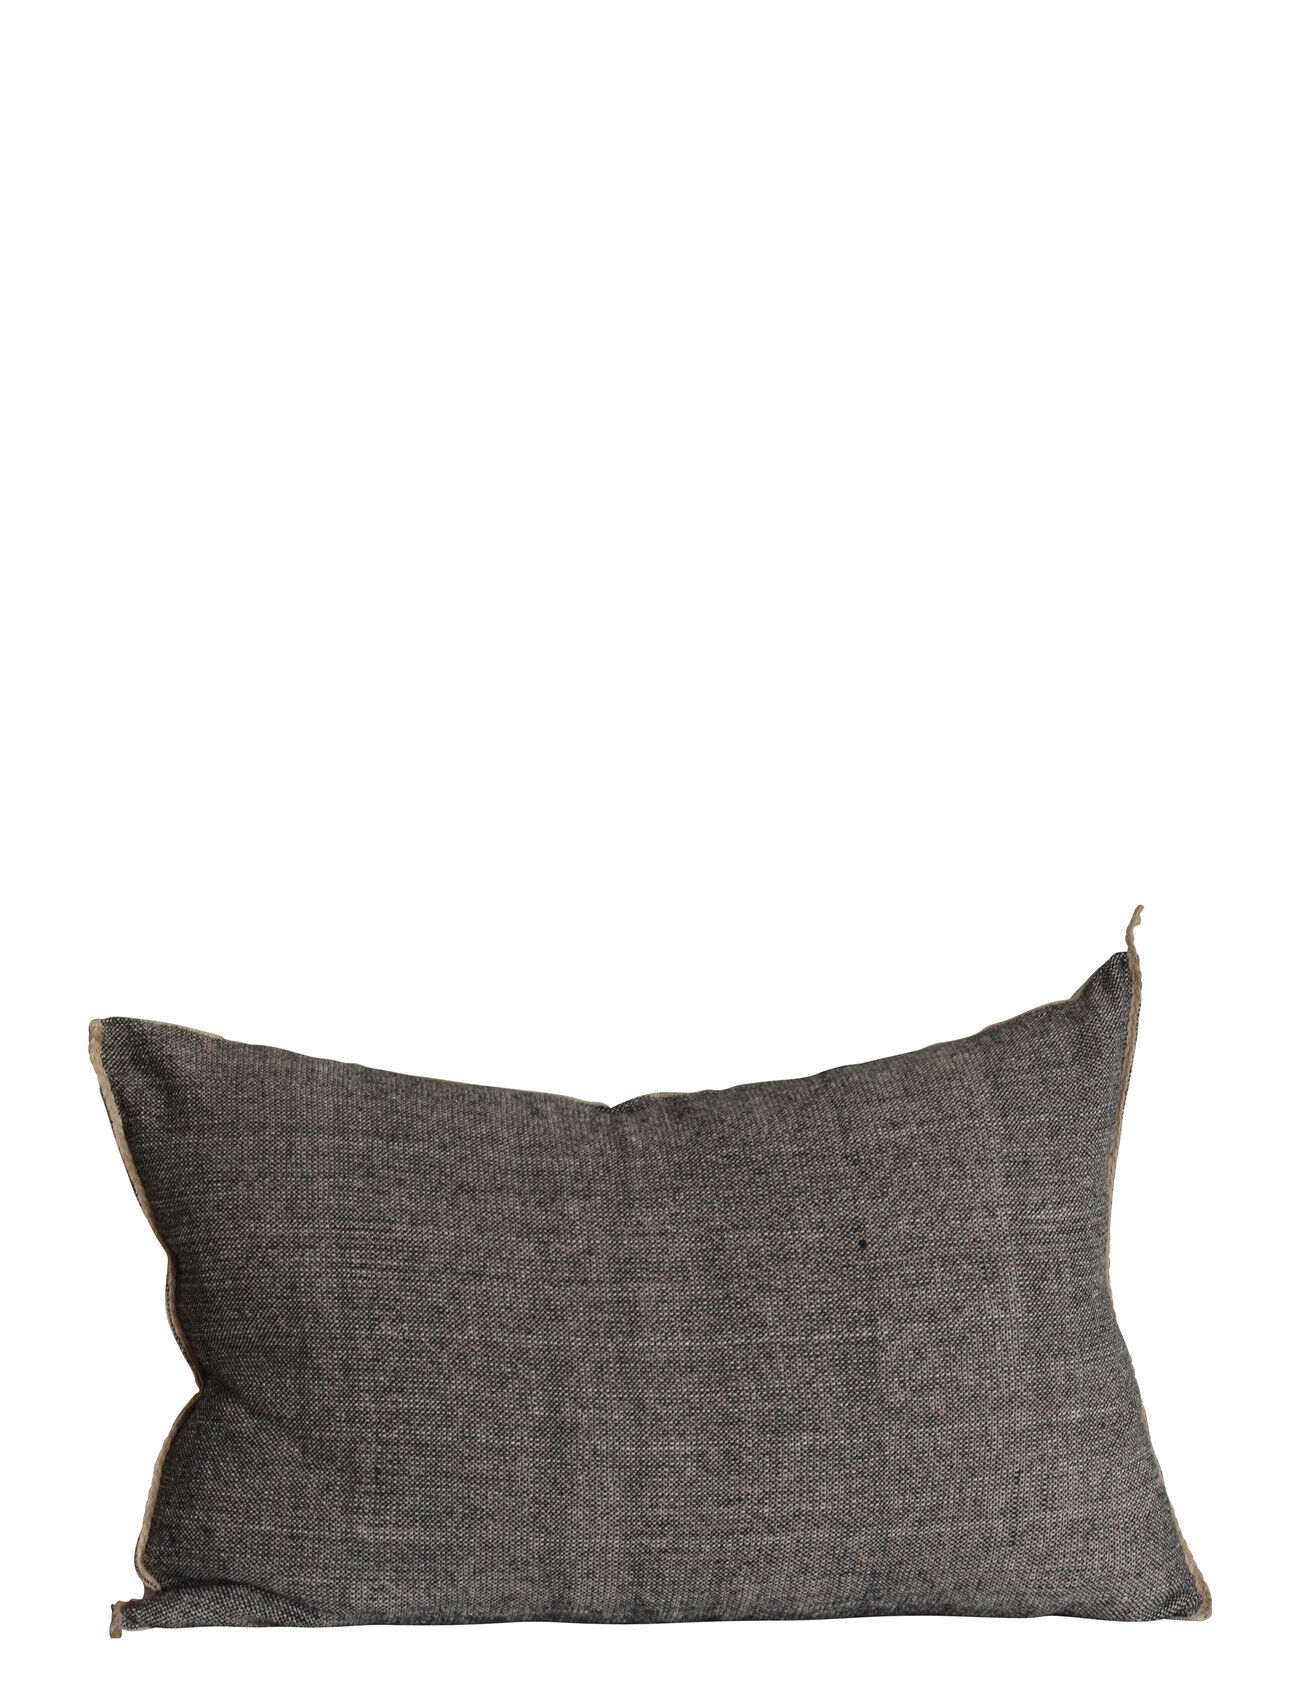 Mimou Pute Bliss Home Textiles Cushions & Blankets Cushions Brun Mimou